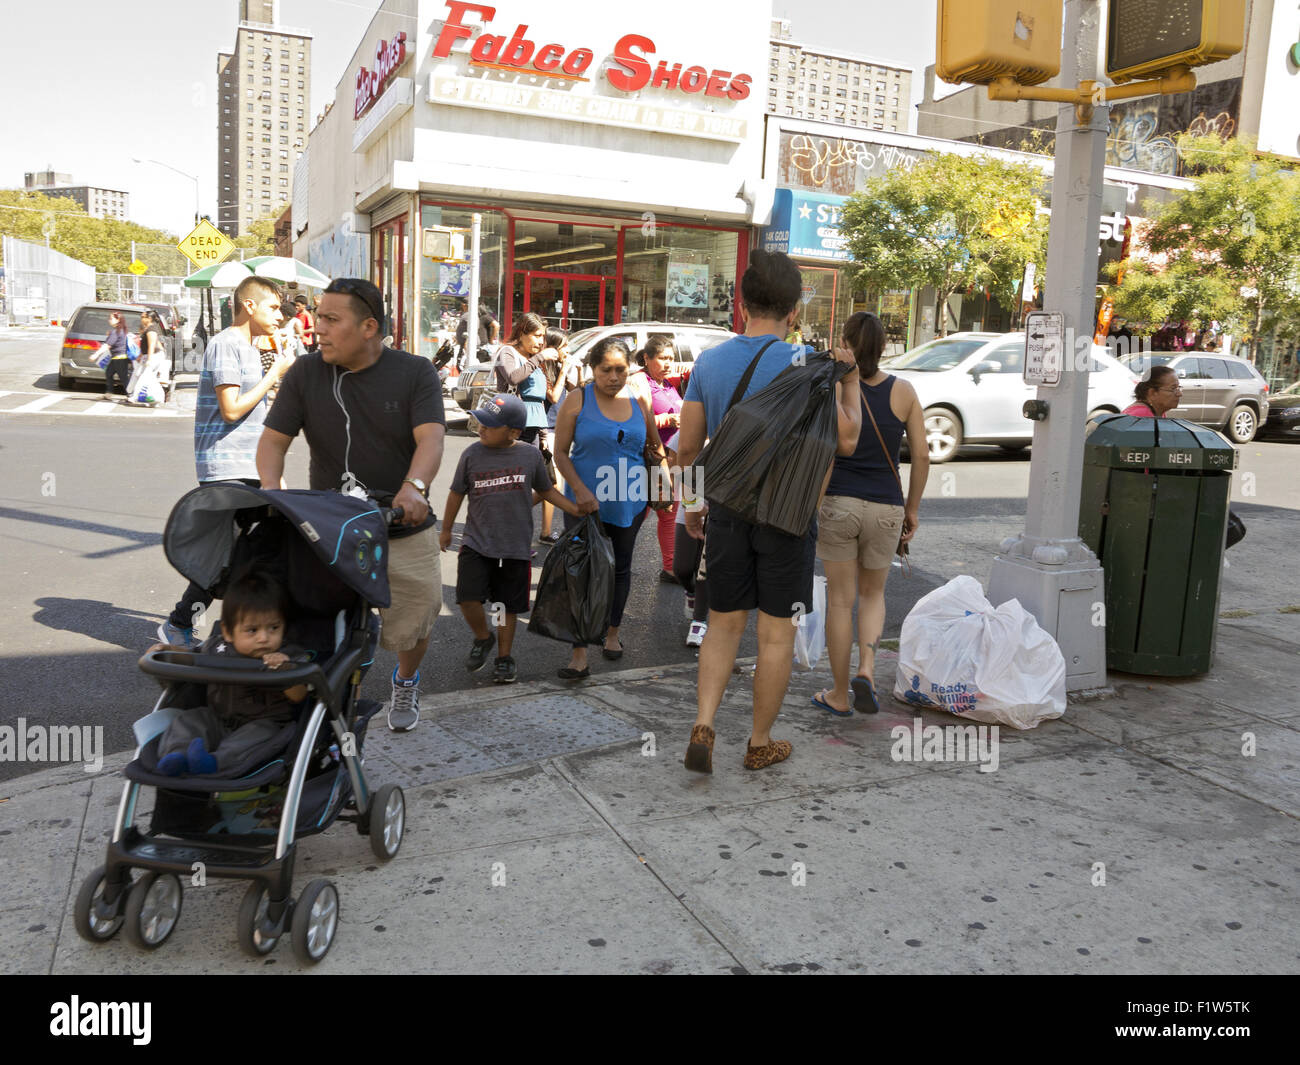 Street scene in the largely, Hispanic neighborhood of Williamsburg, Brooklyn in New York. Stock Photo